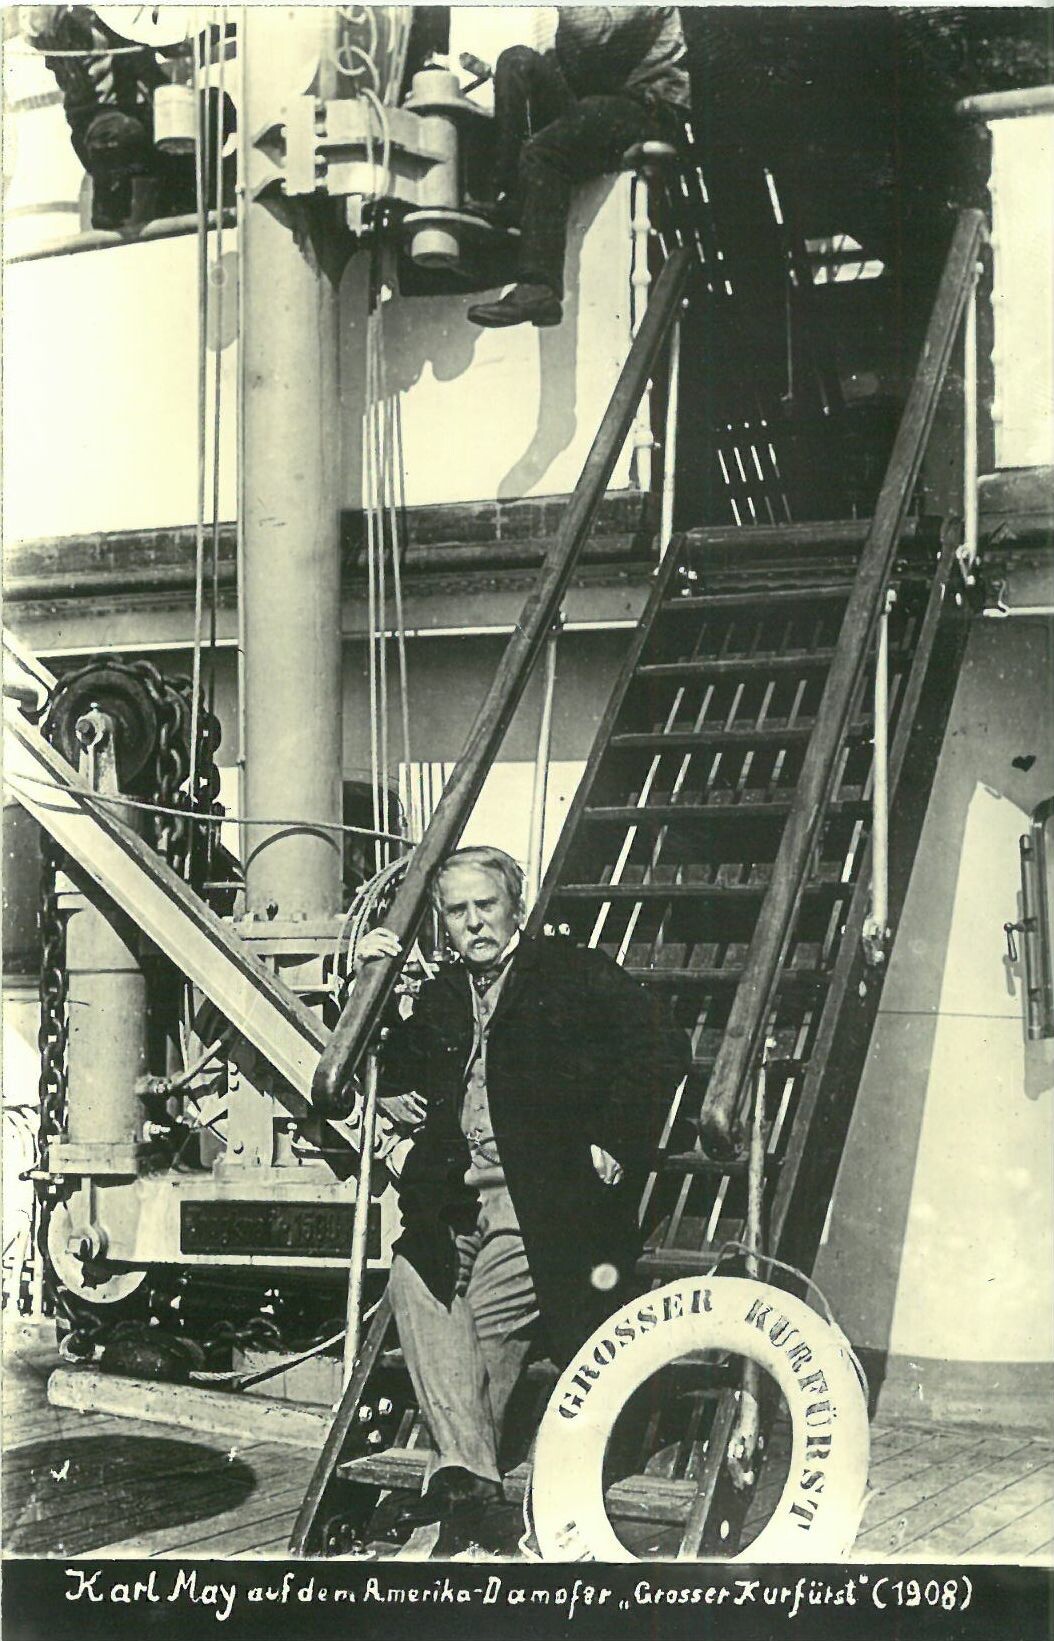 Karl May auf dem Amerika-Dampfer "Großer Kurfürst" (1908) (Karl-May-Museum gGmbH RR-R)